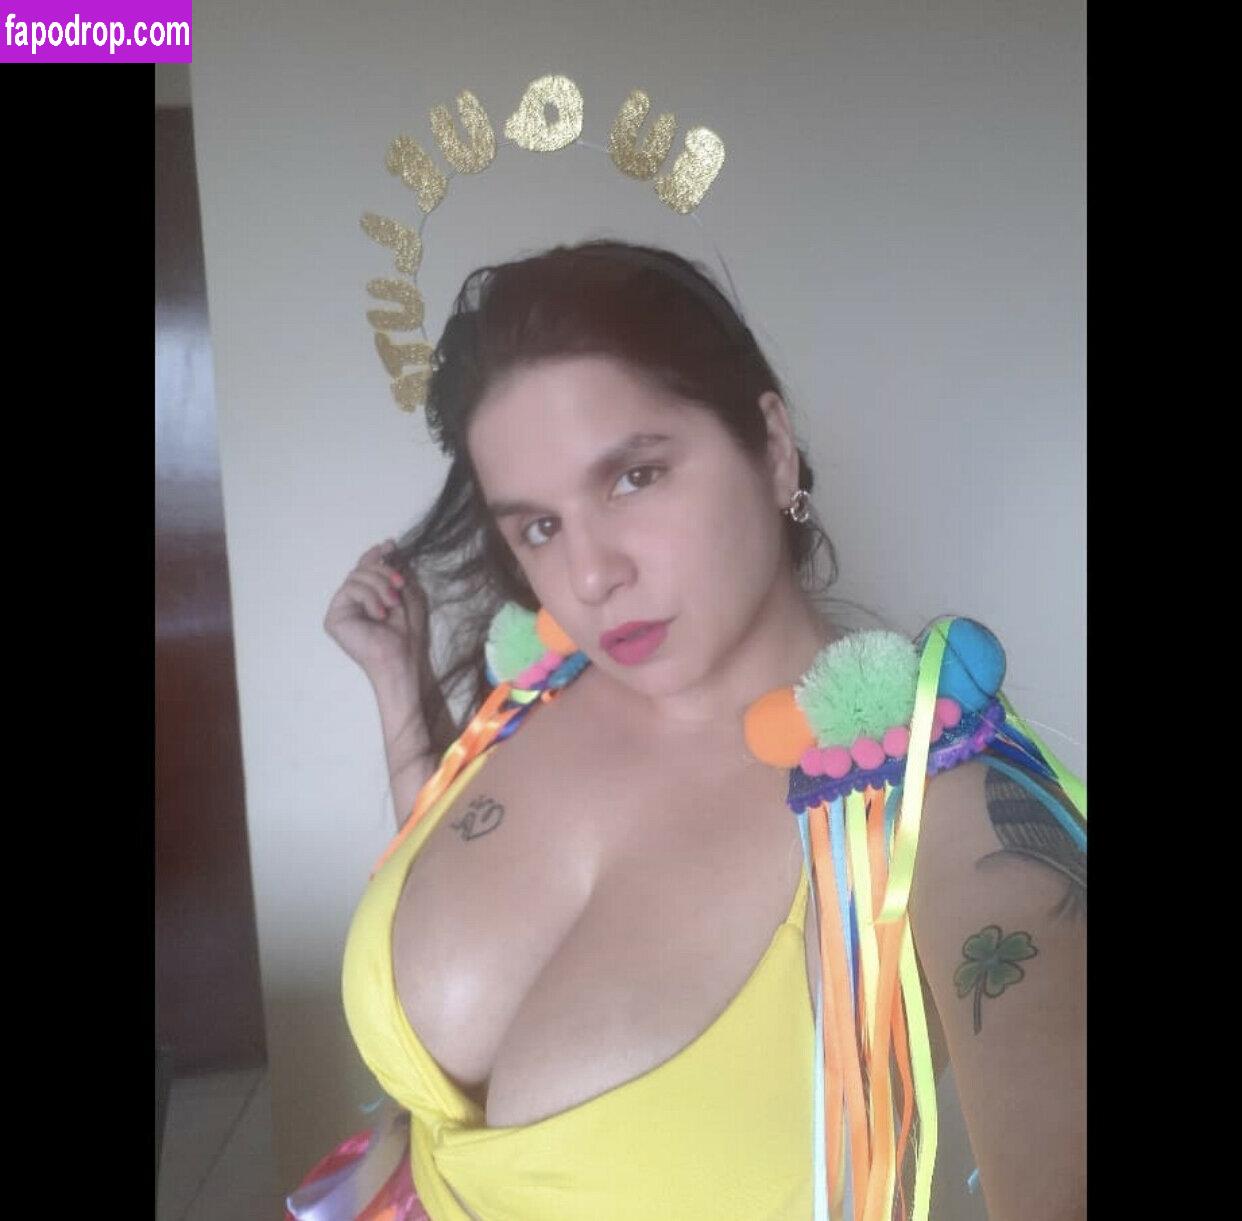 Silmara Cavalcante Silva / silmarasilvacavalcante leak of nude photo #0009 from OnlyFans or Patreon